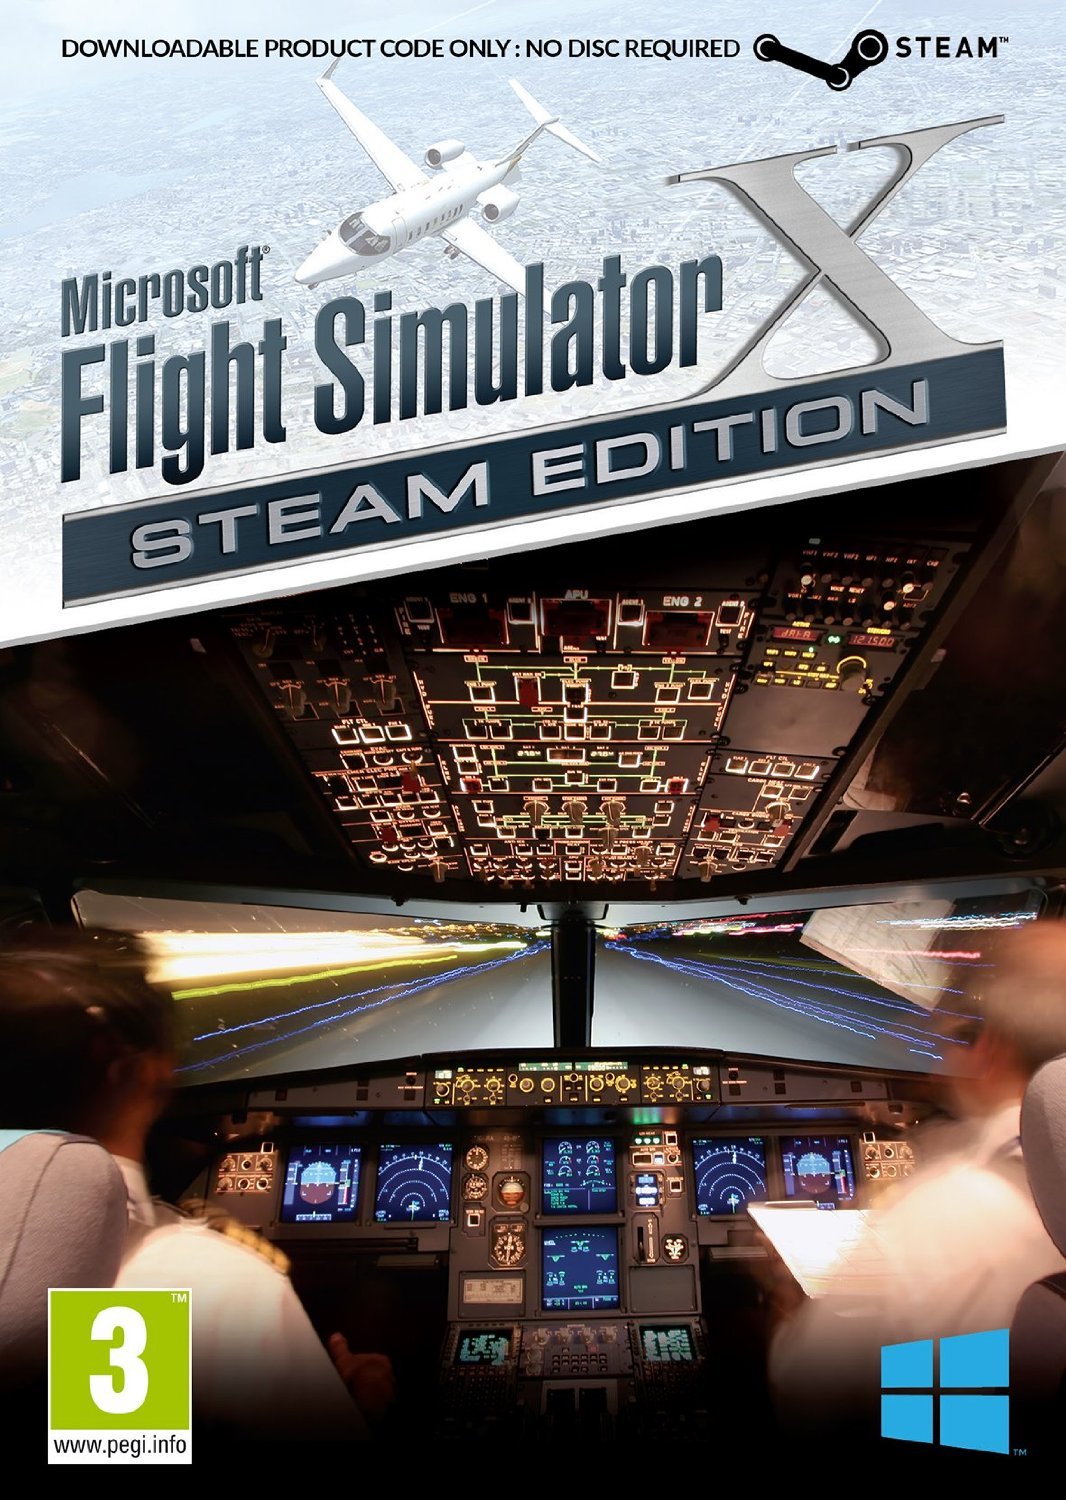 download flight simulator x steam edition free